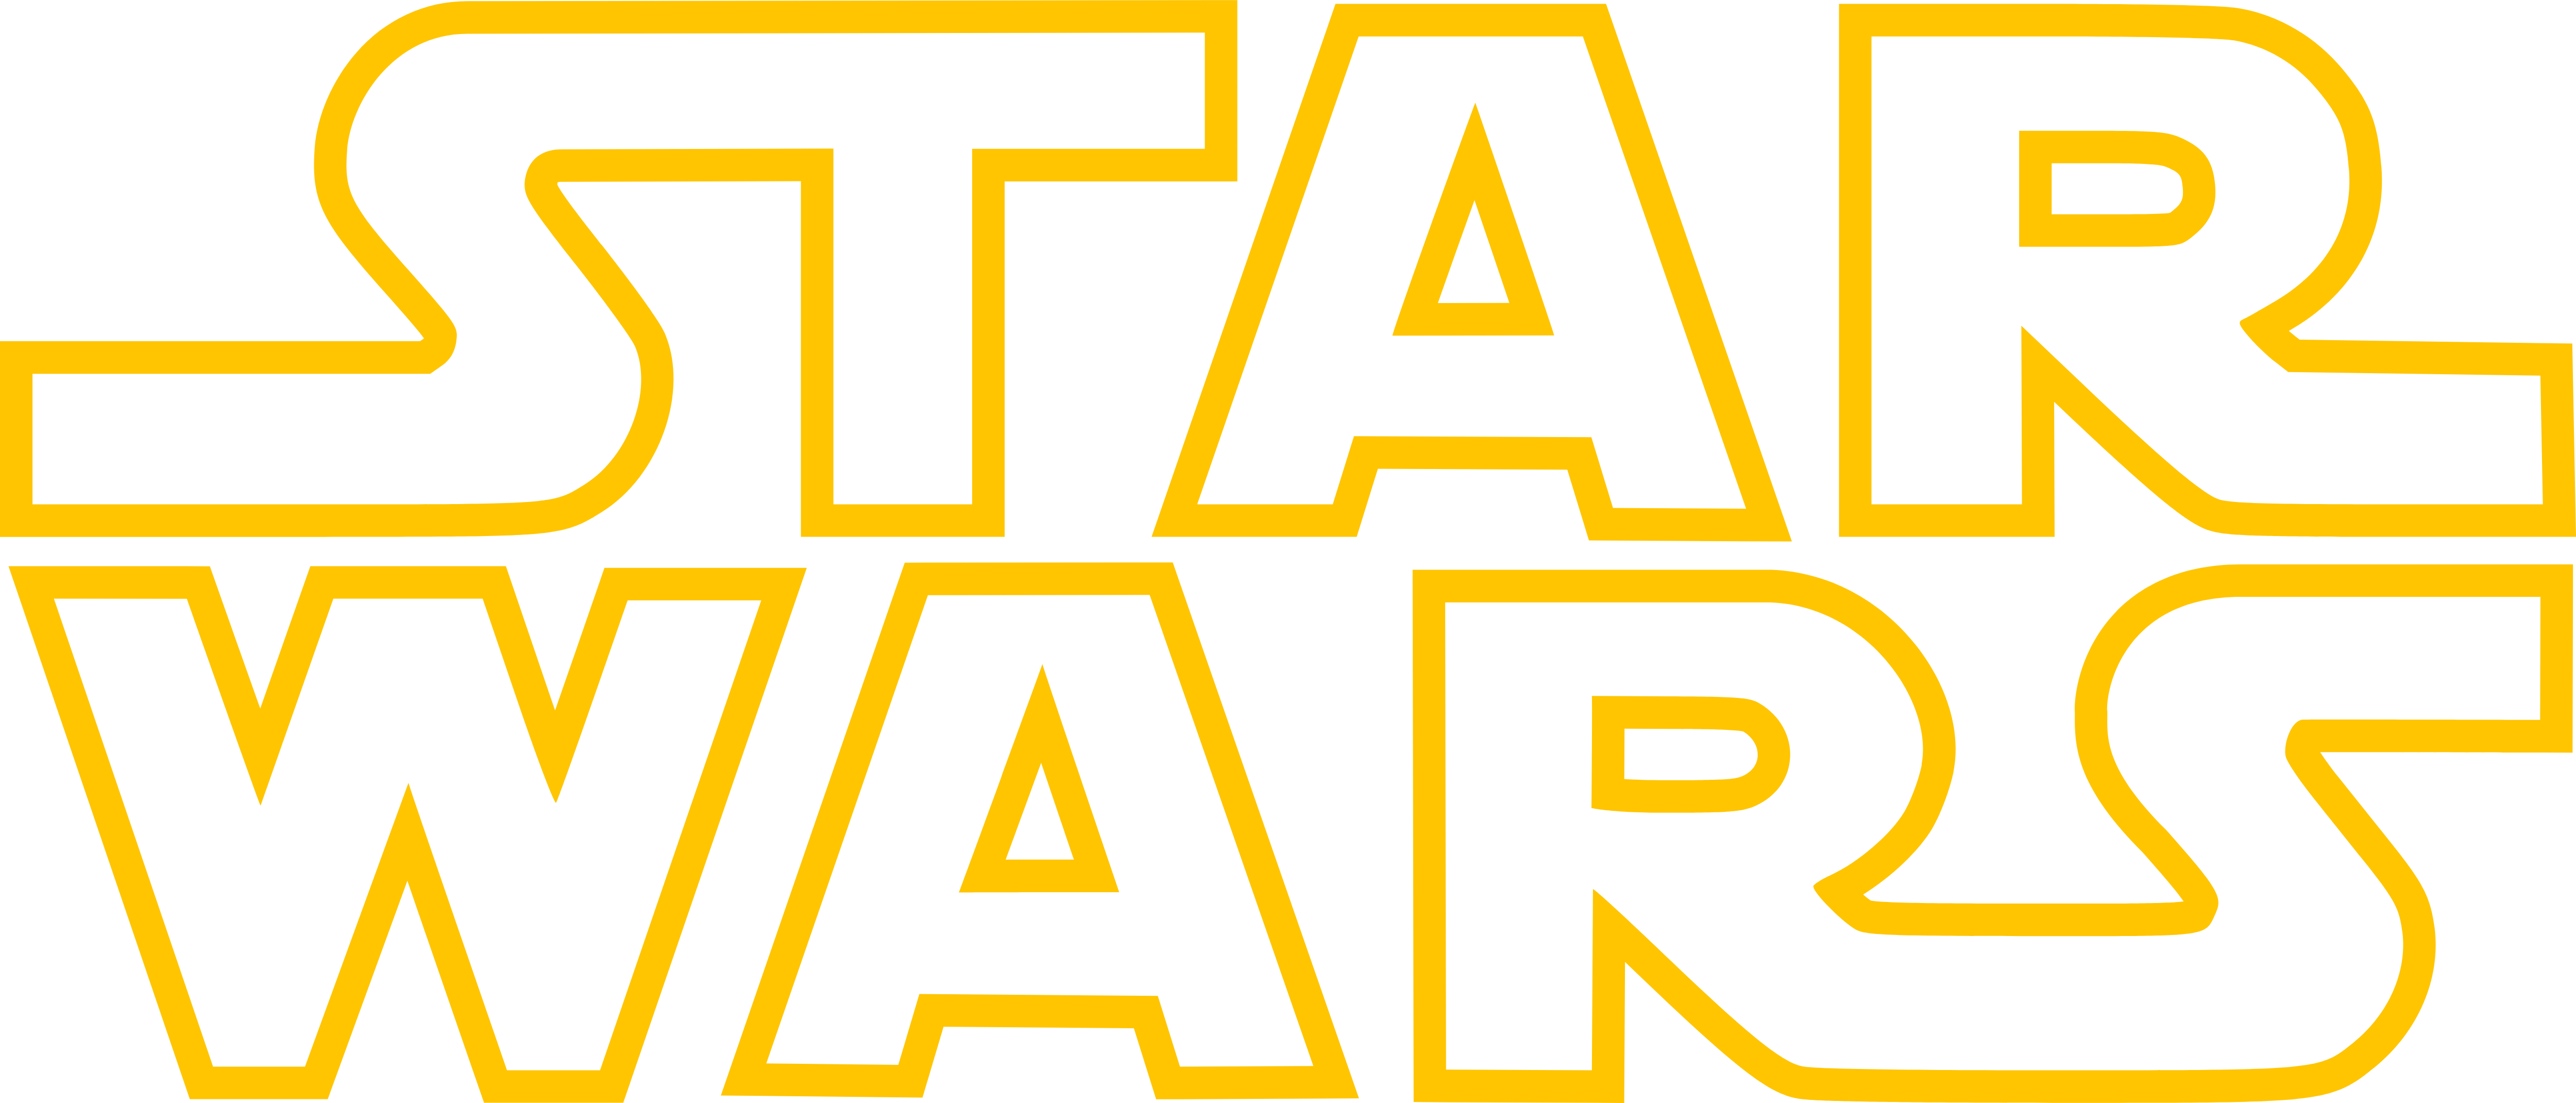 Star_Wars_logo-1